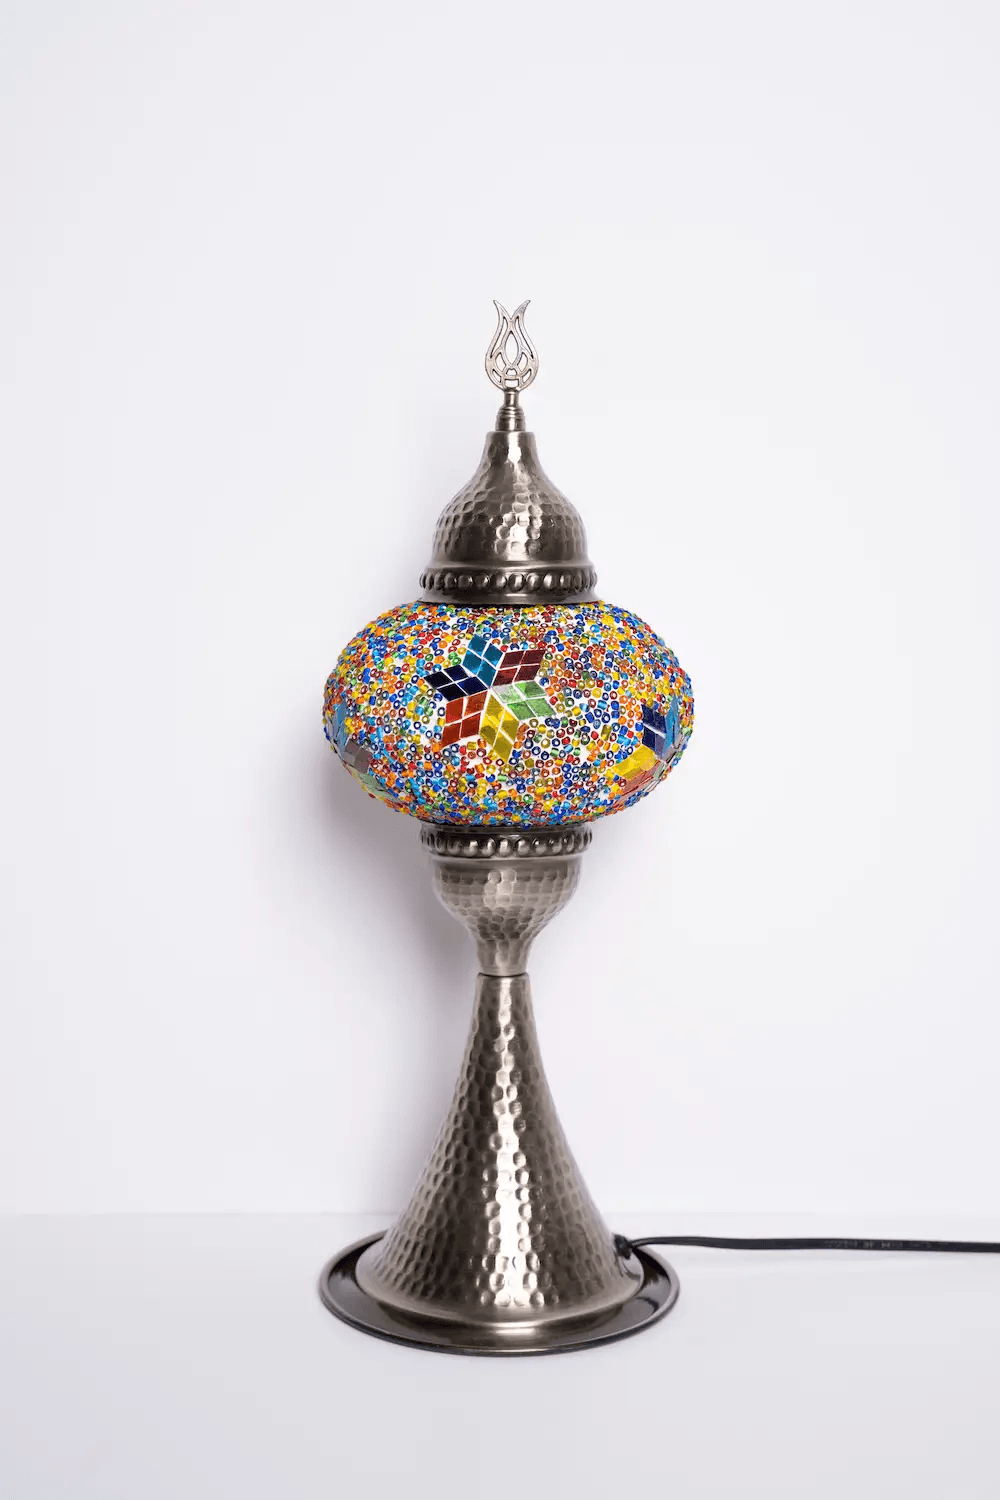 Elite Turkish Mosaic Glass Decorative Table Lamps - Multicolor Little Star - KAFTHAN